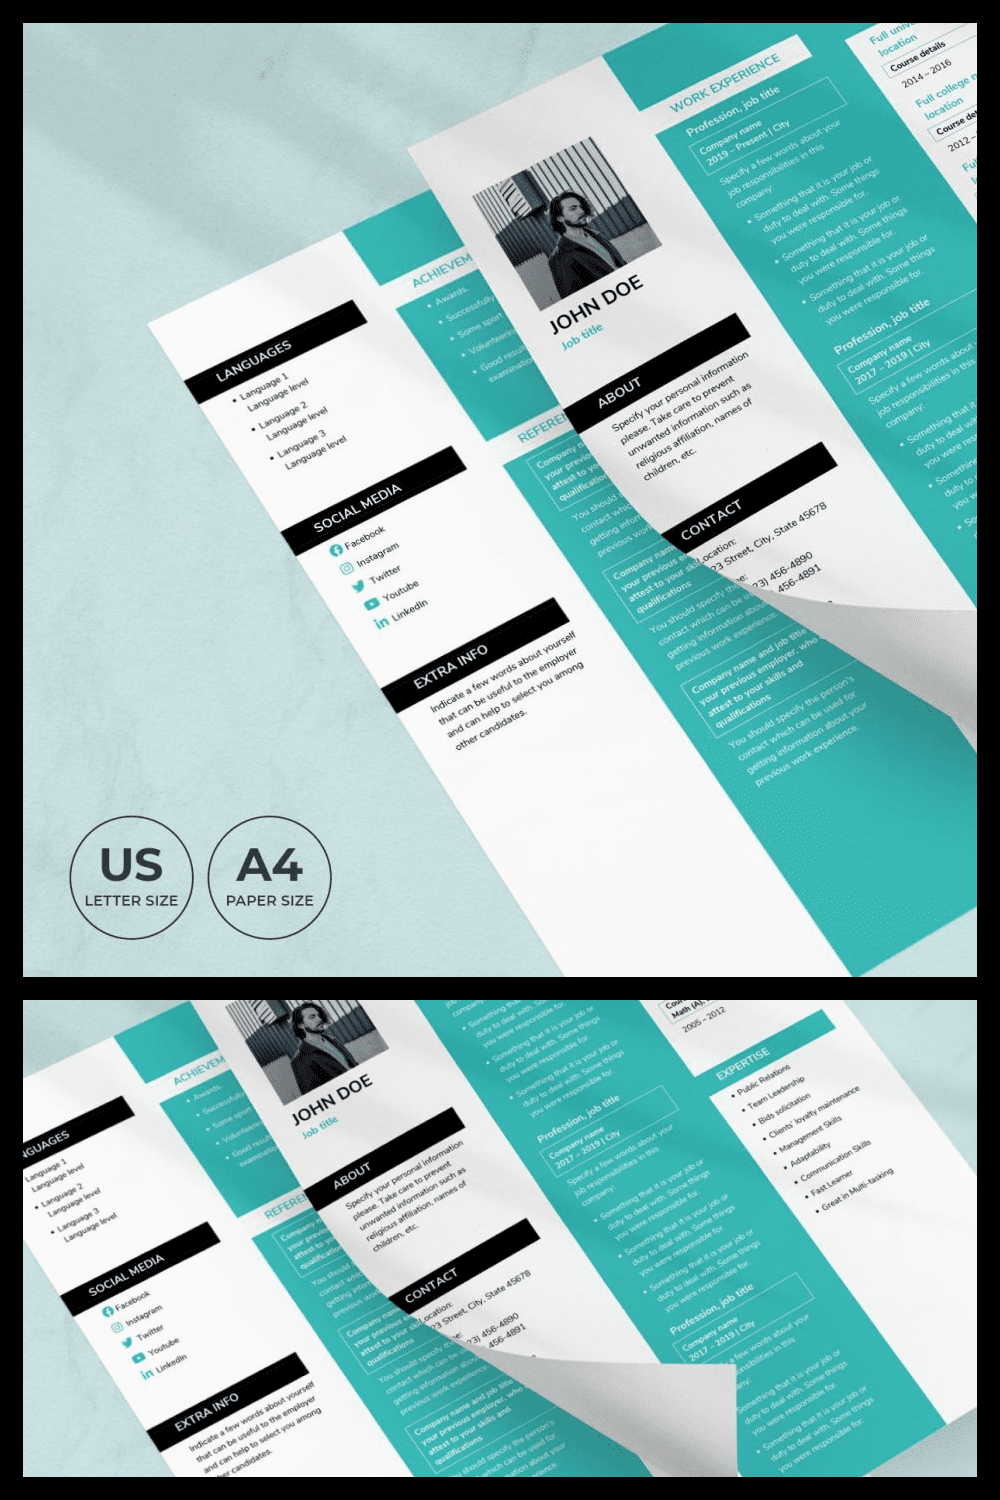 Creative Agency CV Resume Template - MasterBundles - Pinterest Collage Image.